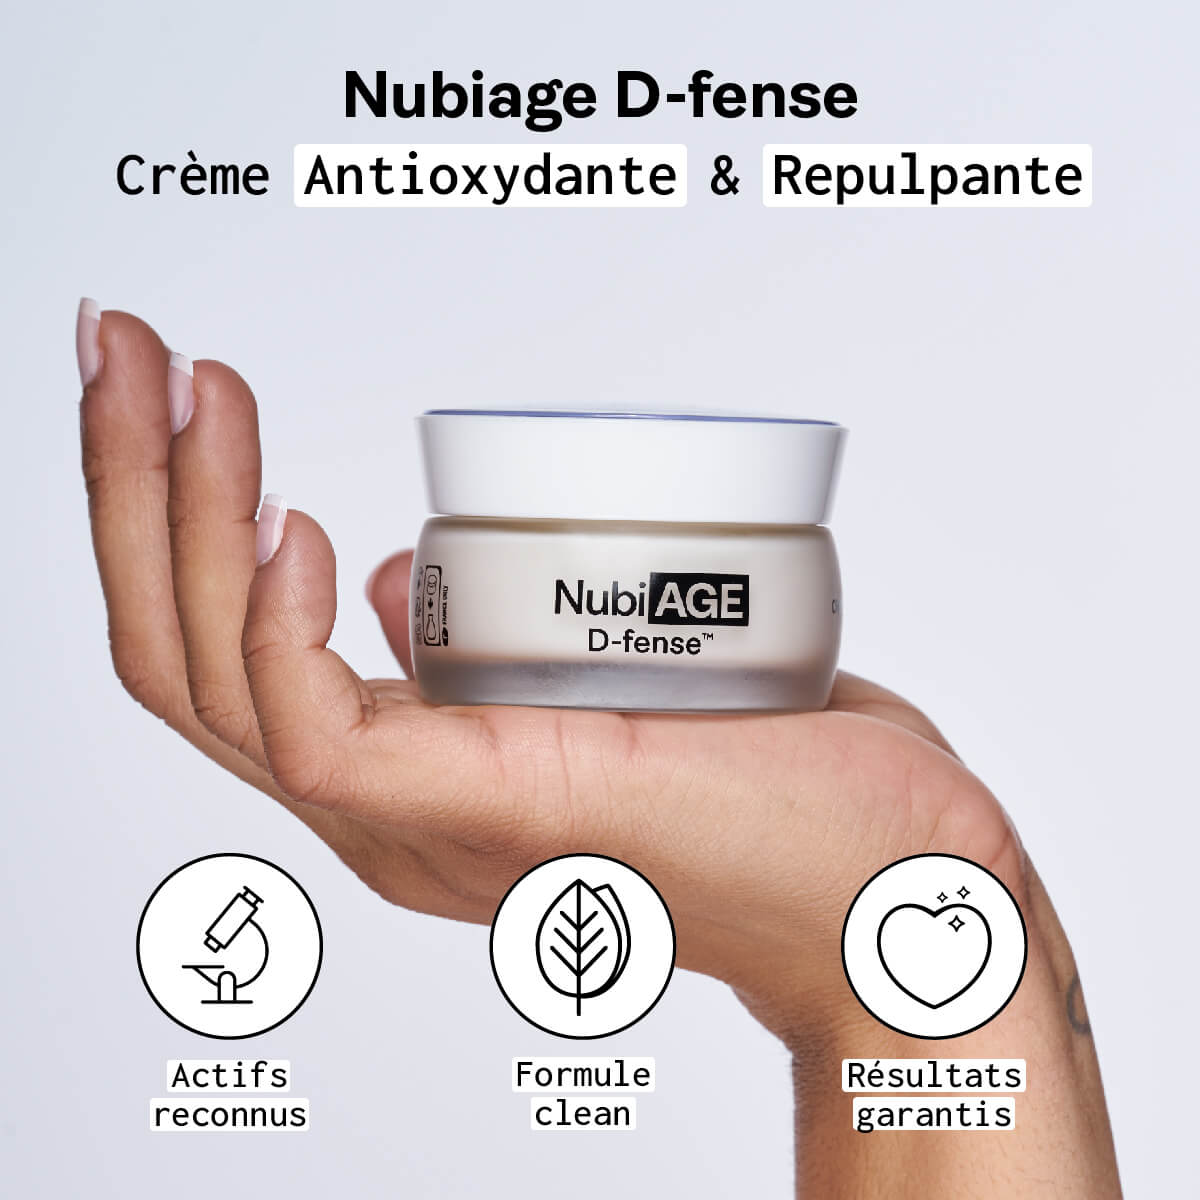 NubiAGE D-fense™ - Antioxidant &amp; Plumping Cream, 50ml